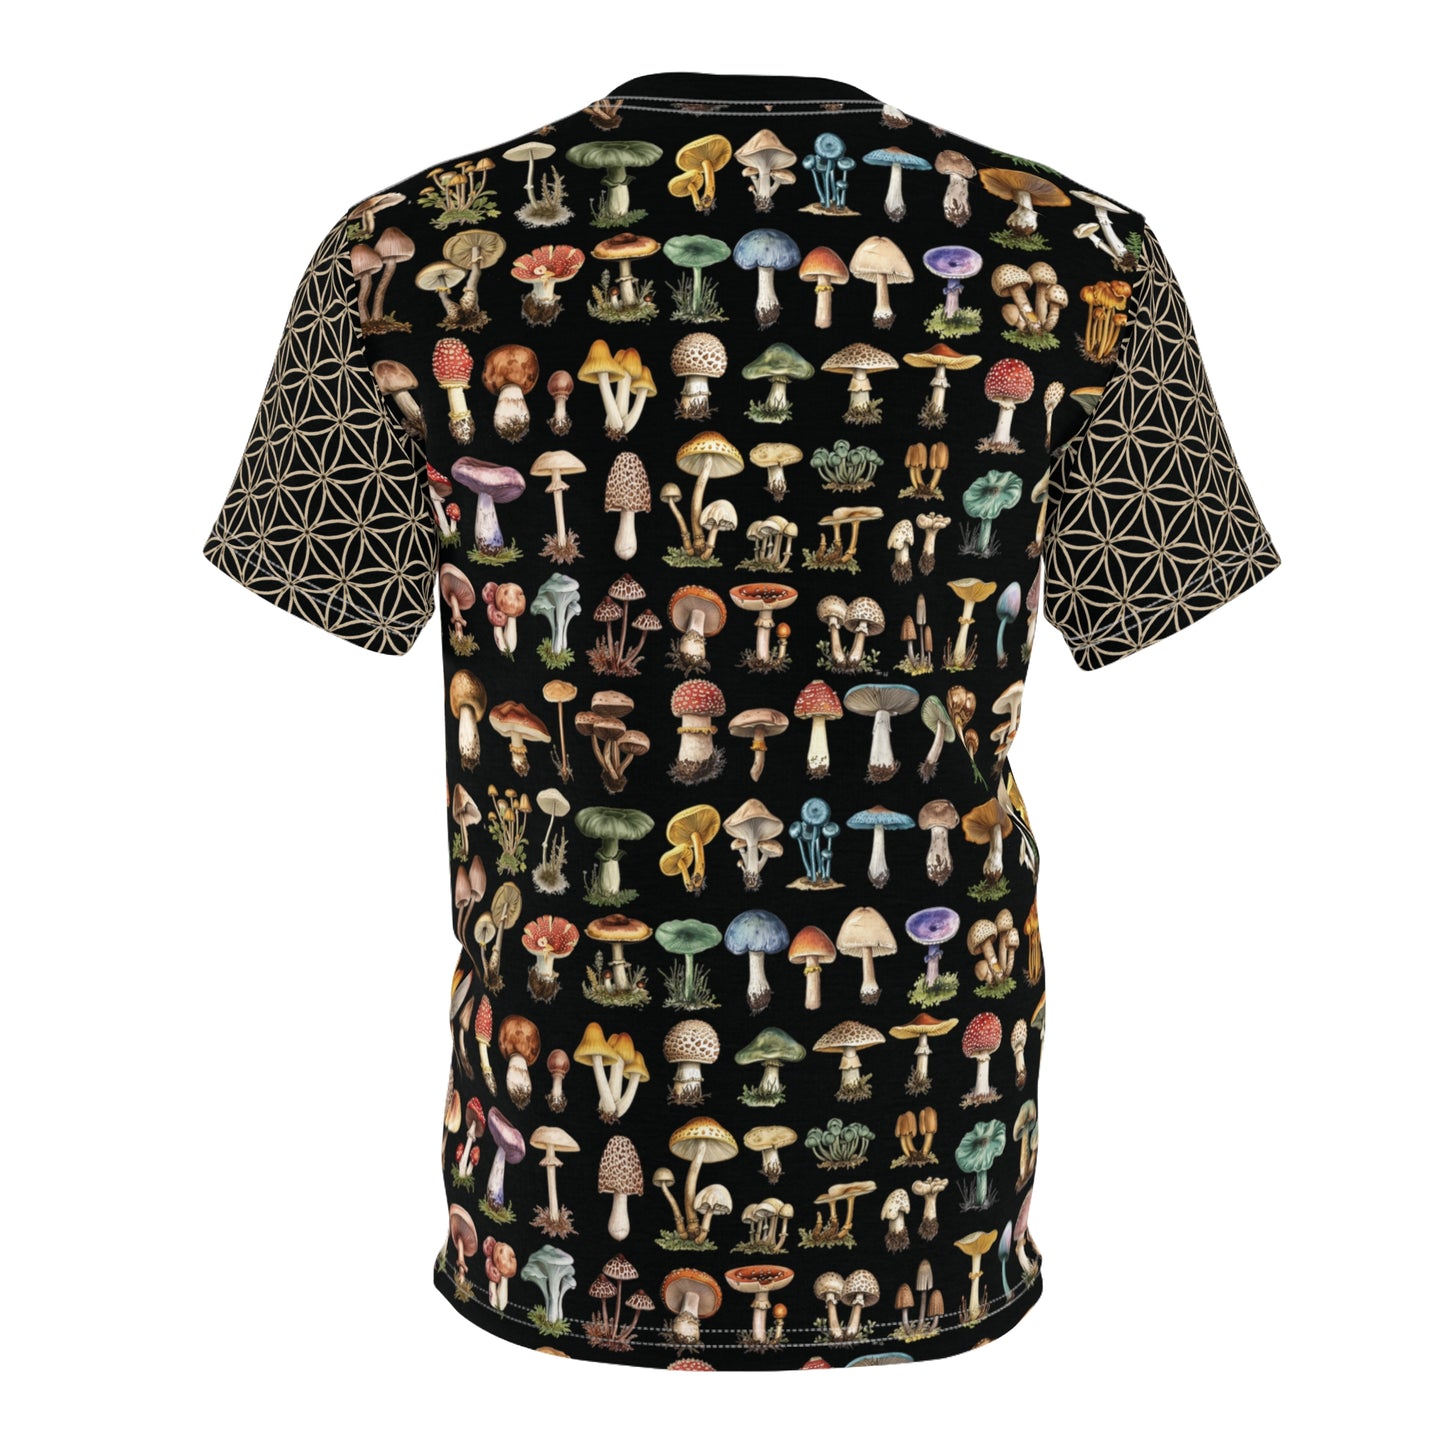 Mushroom Shirt, Vintage Mushroom T-shirt, Festival Outfit